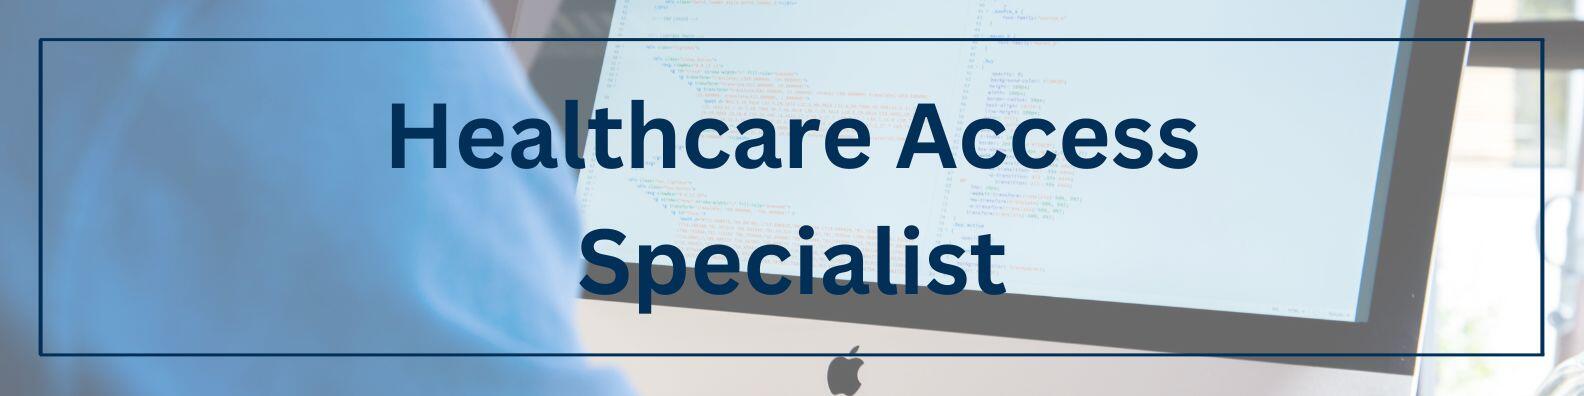 Healthcare Access Specialist